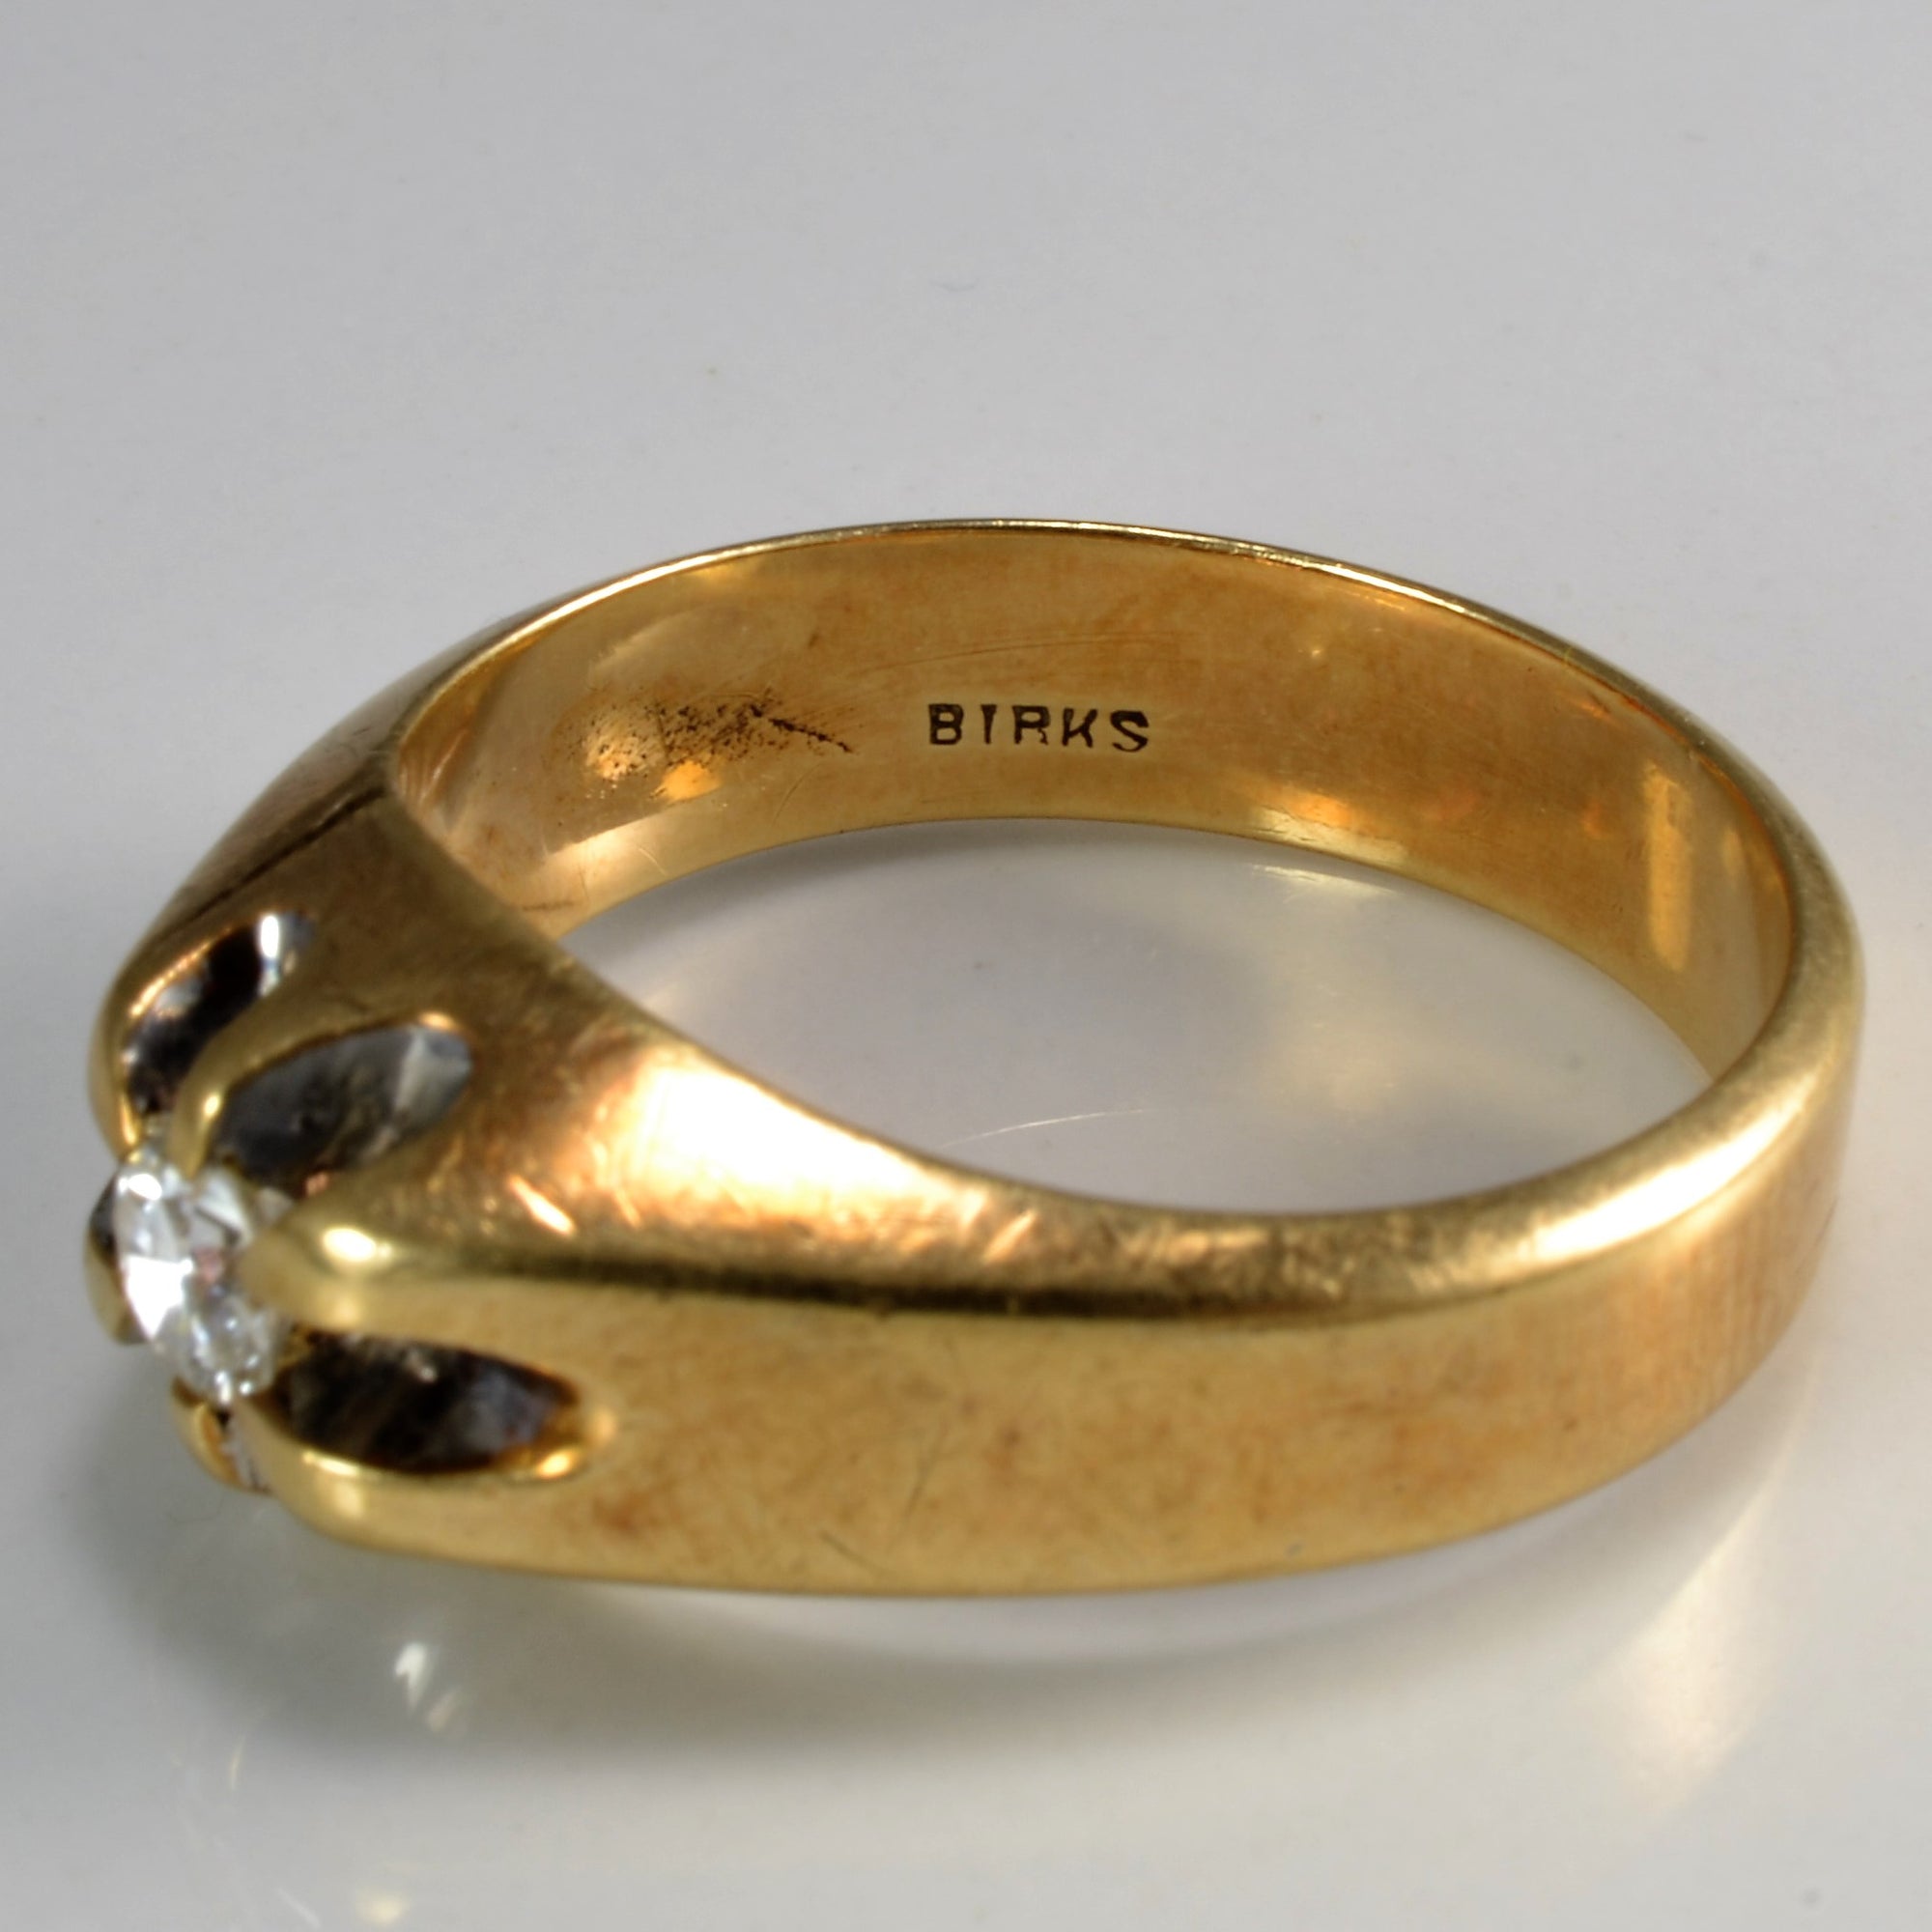 Birks' Vintage Belcher Set Solitaire Diamond Ring | 0.28 ct | SZ 10.25 |